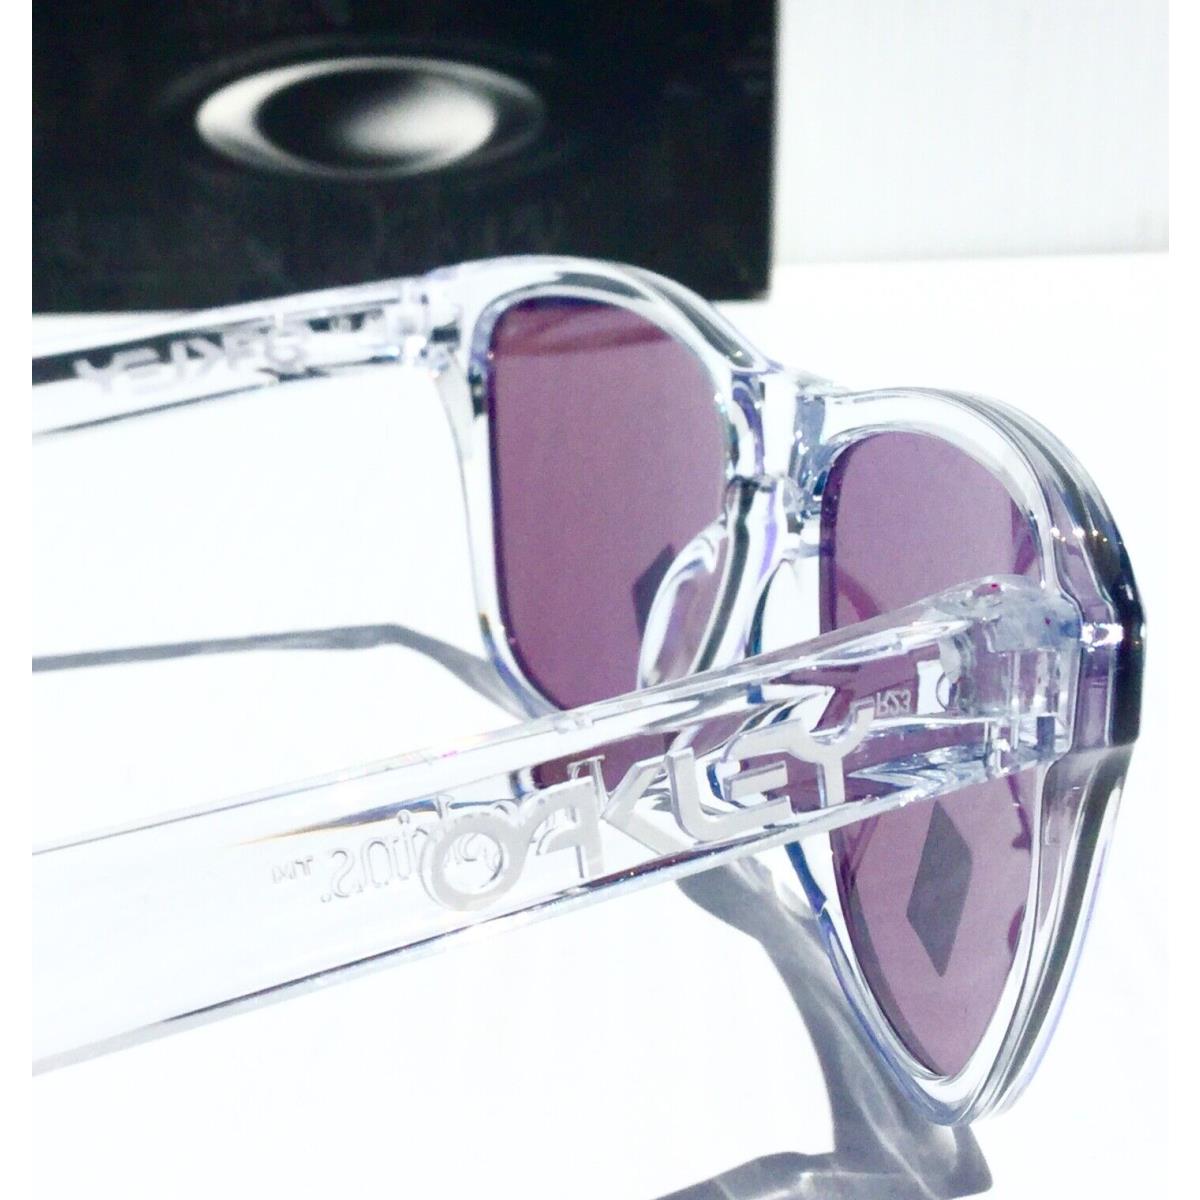 Oakley sunglasses Frogskins - Purple Frame, Clear Lens